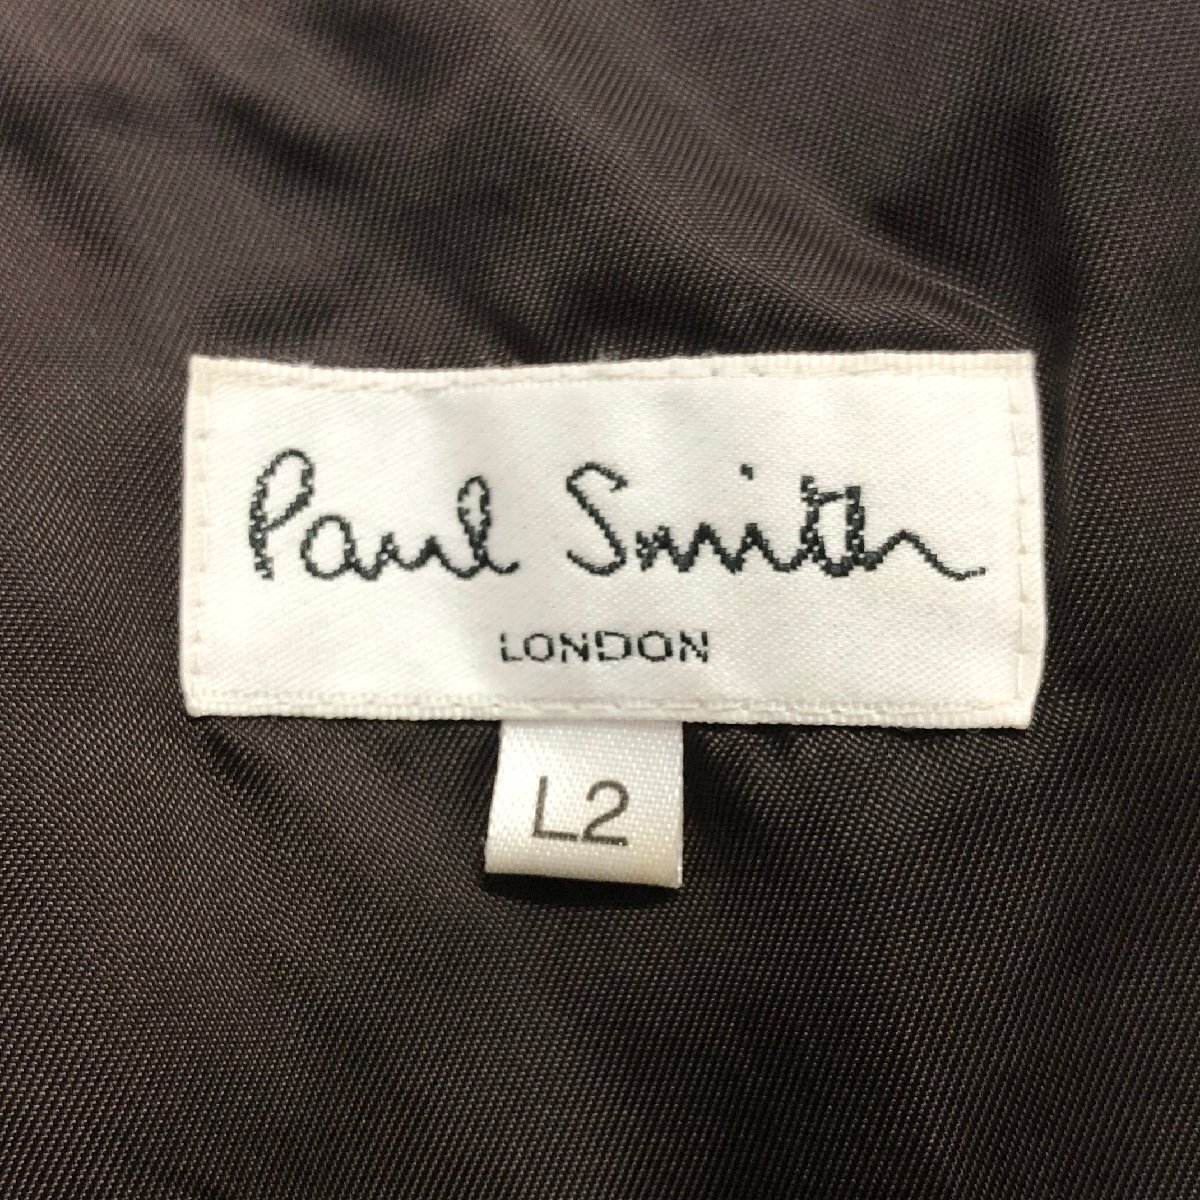 ●Paul Smith ポールスミス レザージャケット コート アウター 本革 羊革 ラム革 ジョイックス ブラウン系 サイズL2 メンズ 0.91kg●_画像6